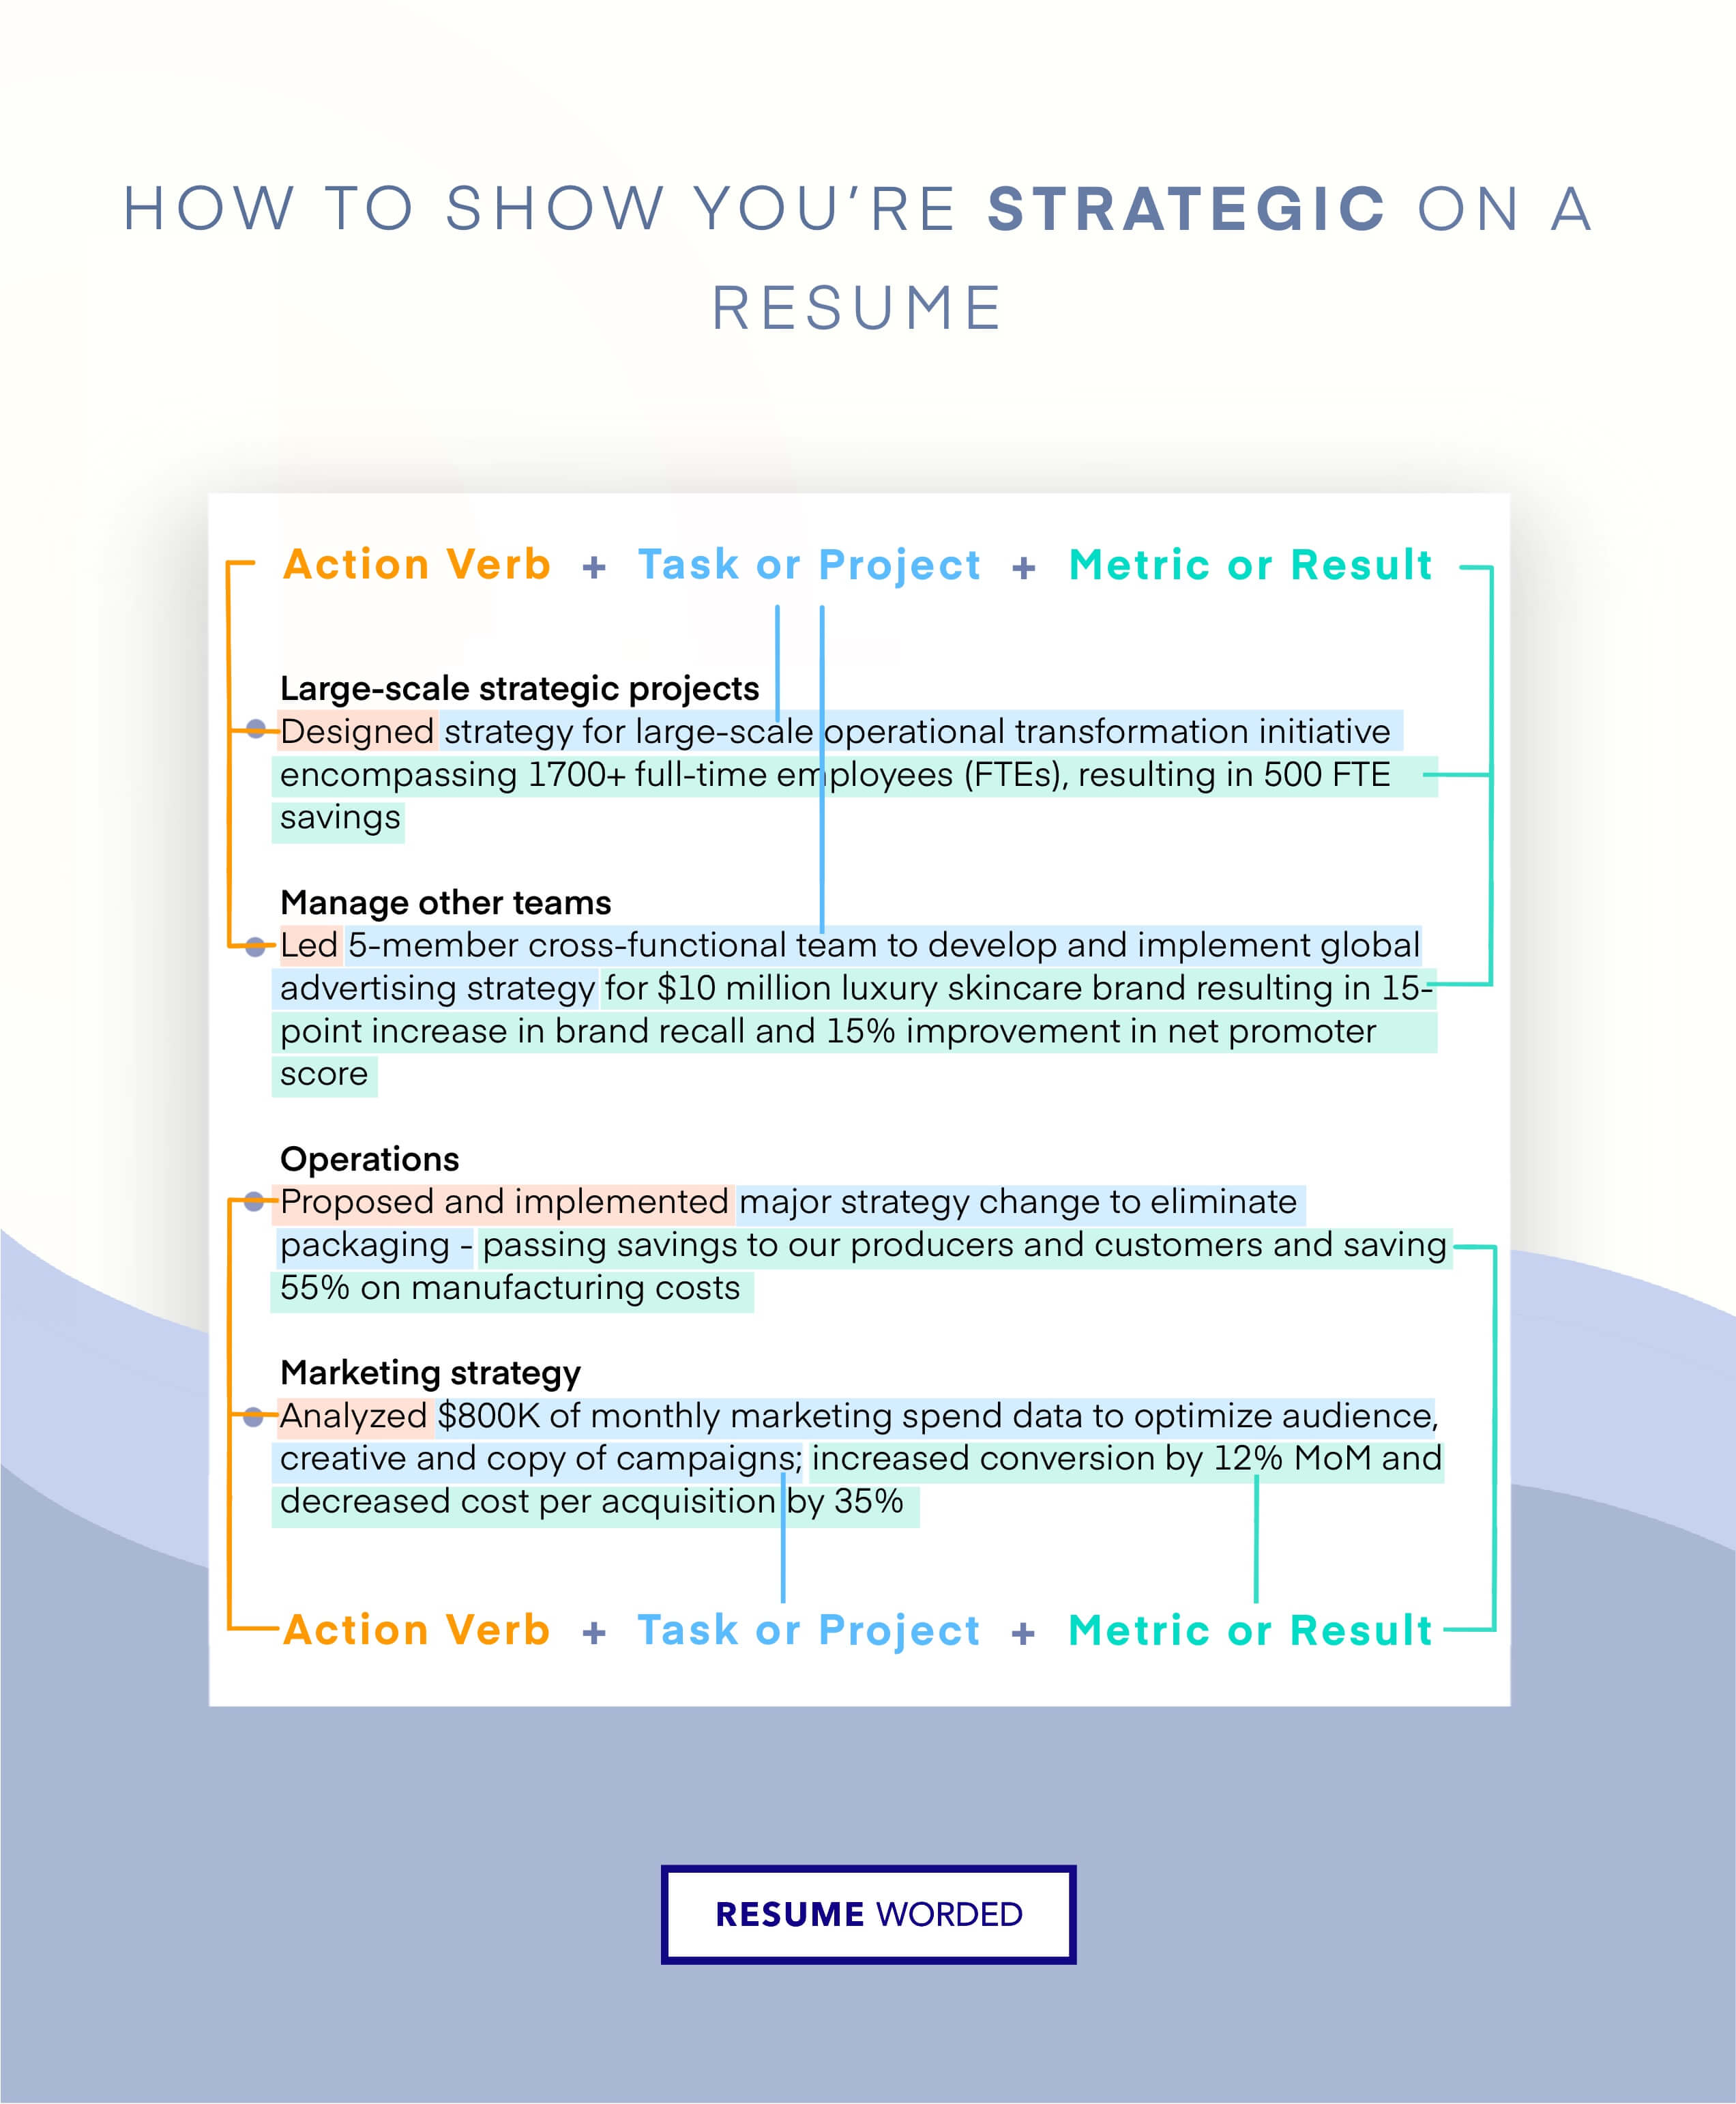 Showcase strategic planning skills - Senior Account Manager CV